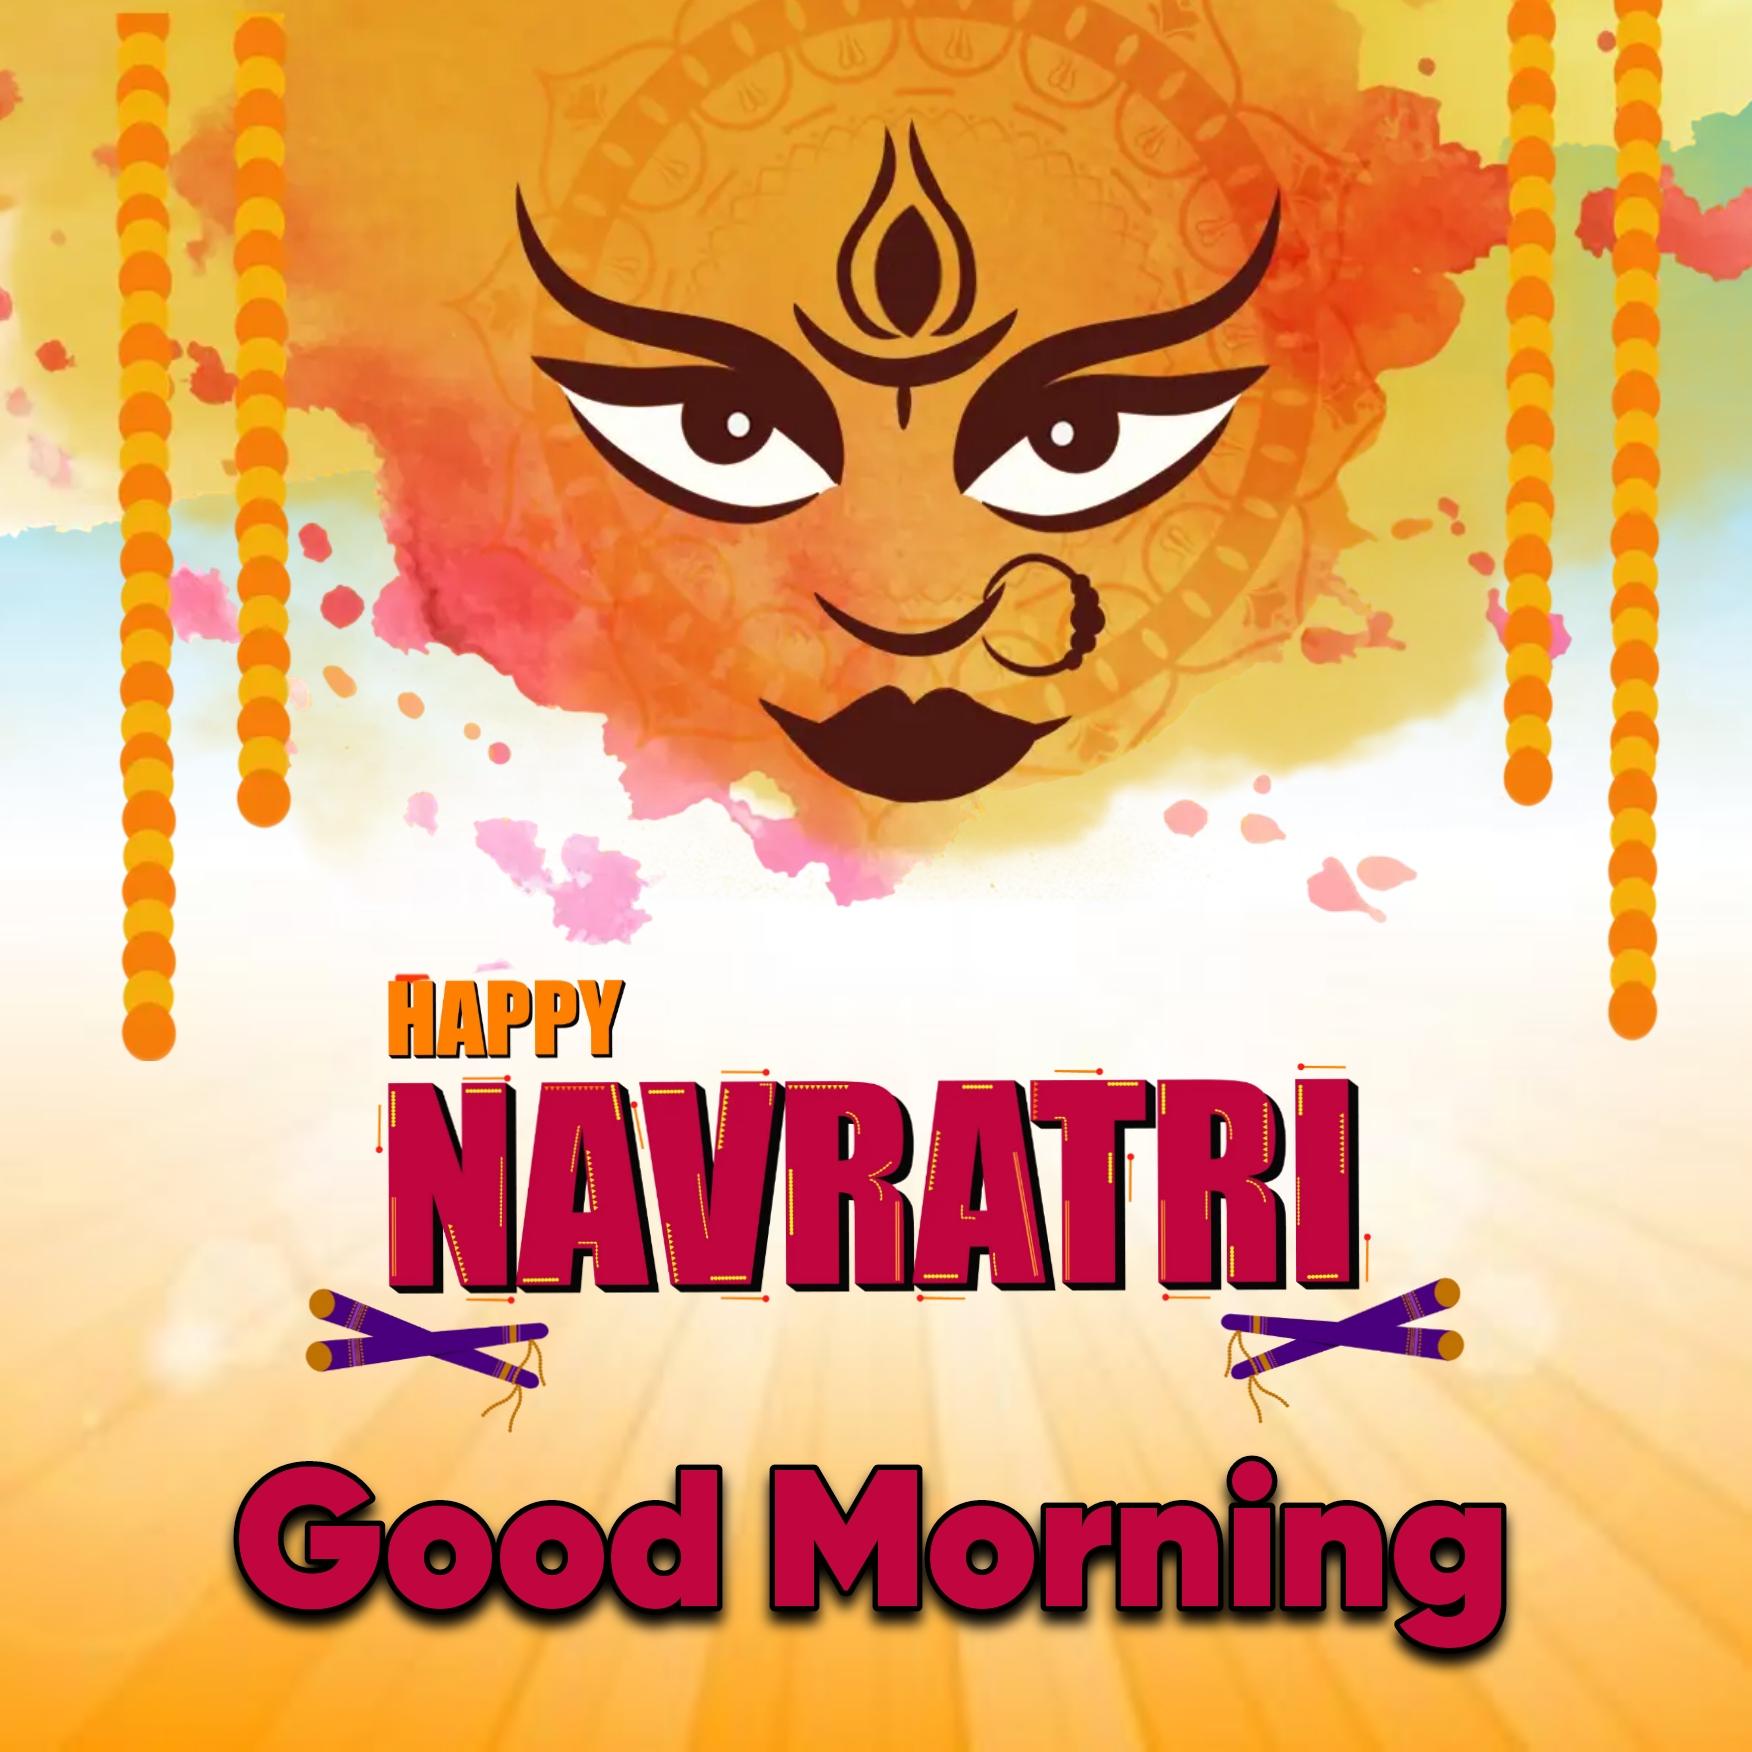 Happy Navratri Good Morning Images